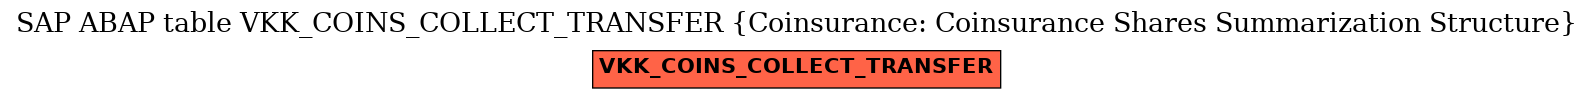 E-R Diagram for table VKK_COINS_COLLECT_TRANSFER (Coinsurance: Coinsurance Shares Summarization Structure)